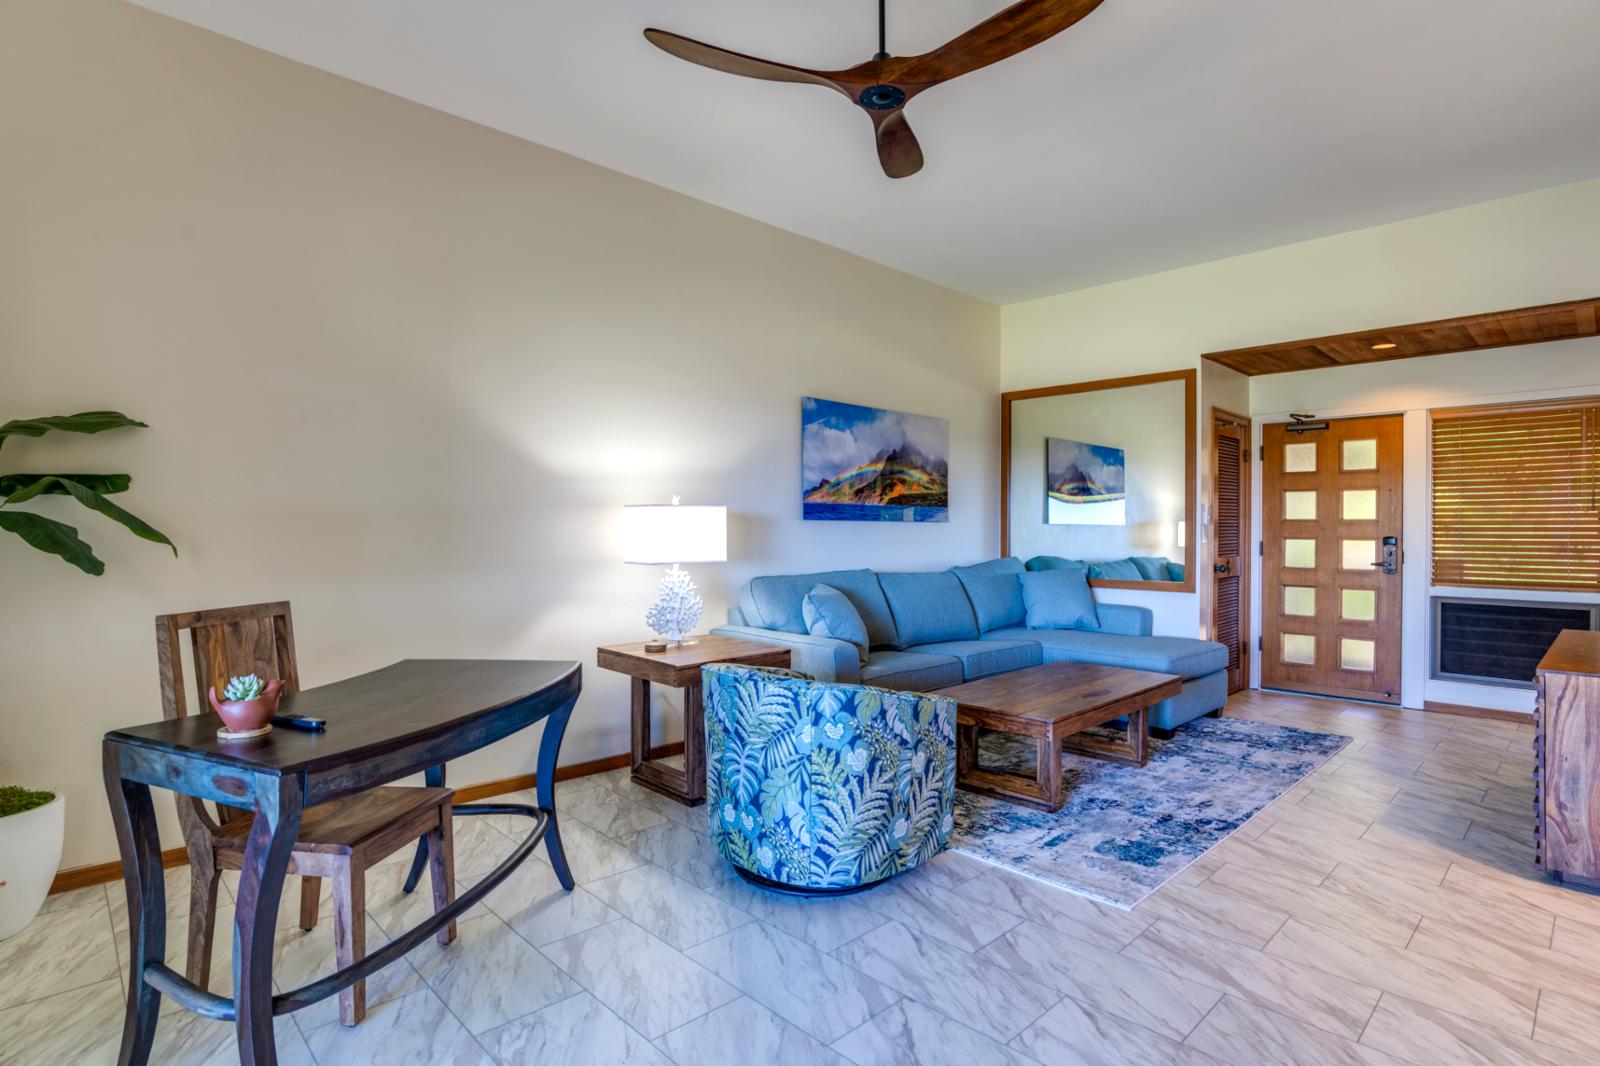 Property Image 2 - Kapalua Ridge Villa 724; Ocean View 1Bedroom/2Bath All New Furniture + Beach Gear. L’Occitane Amenities